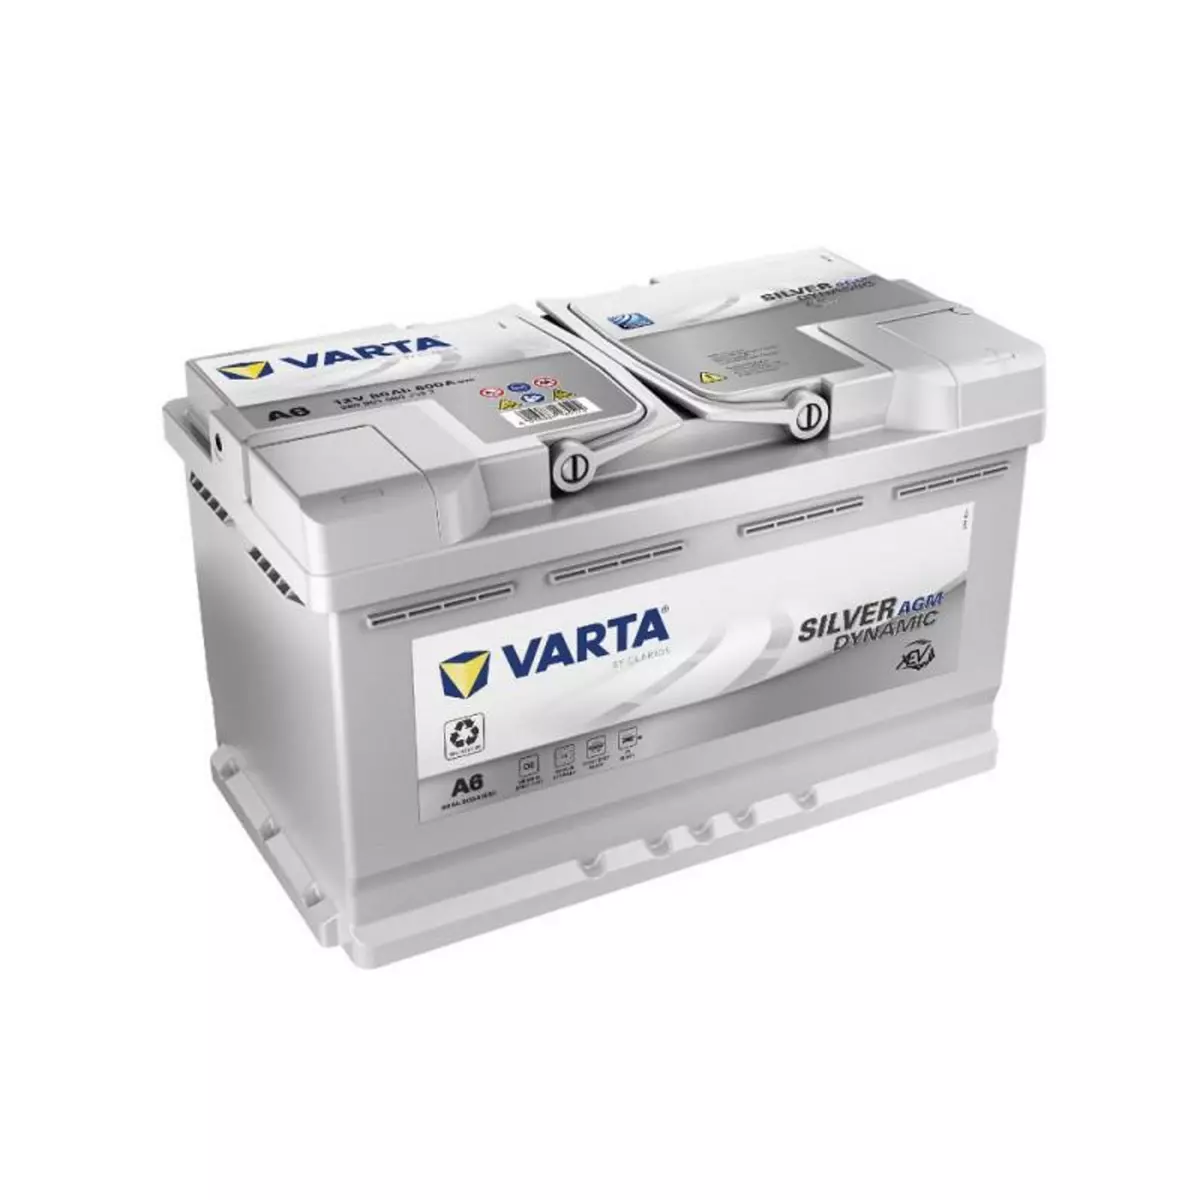 Varta Batterie Varta START-STOP AGM A6 12V 80ah 800A 580 901 080 L4D